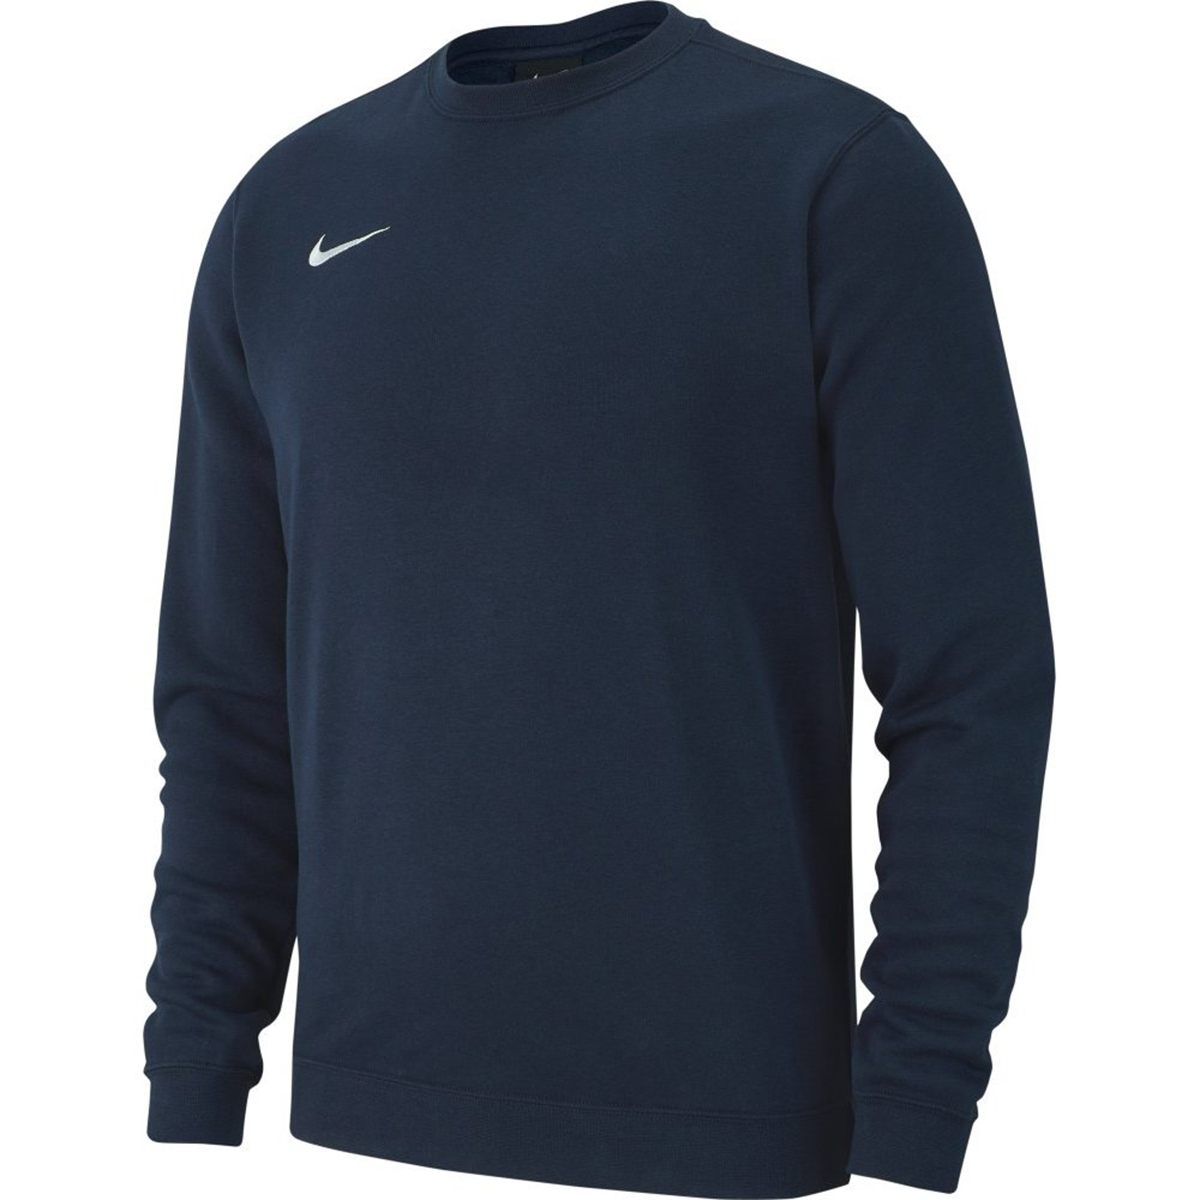 Nike Herren Sweatshirt TEAM CLUB 19 blau